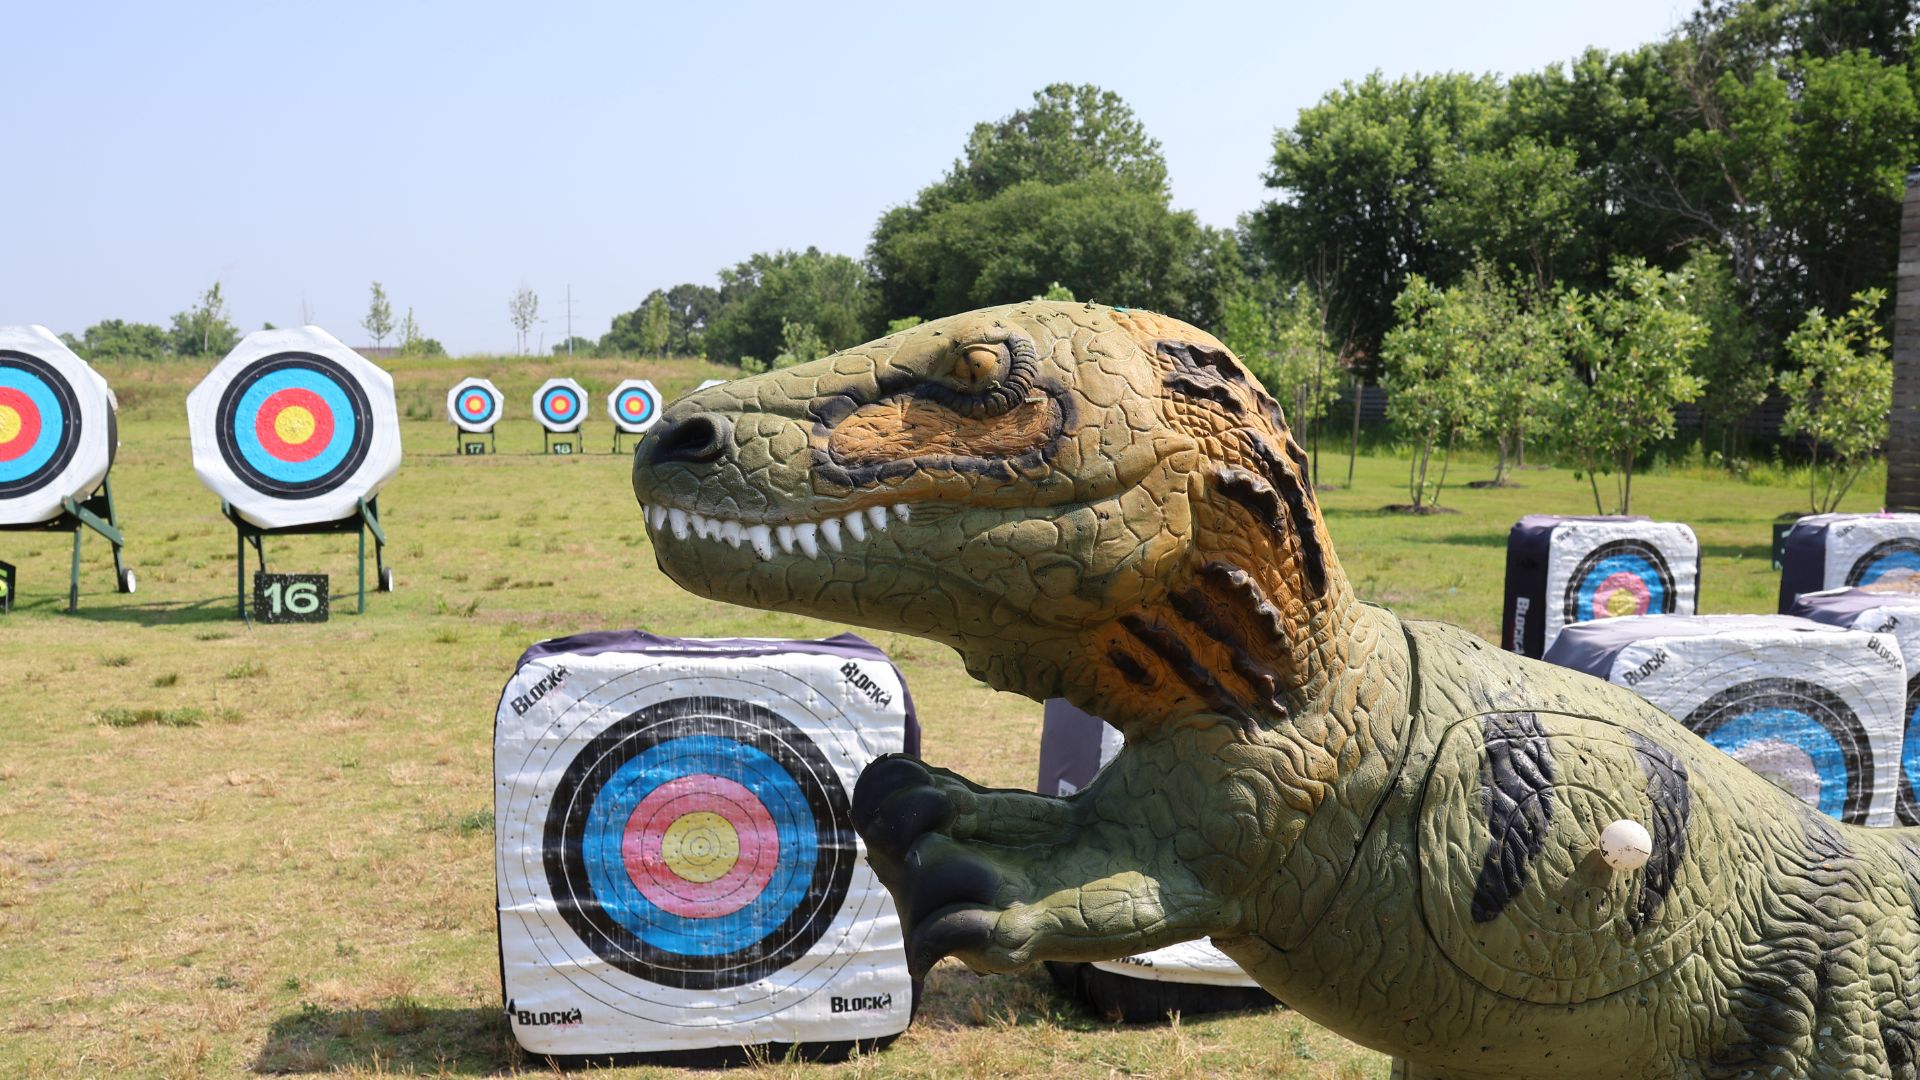 3D dinosaur target at the archery range in Bentonville Arkansas